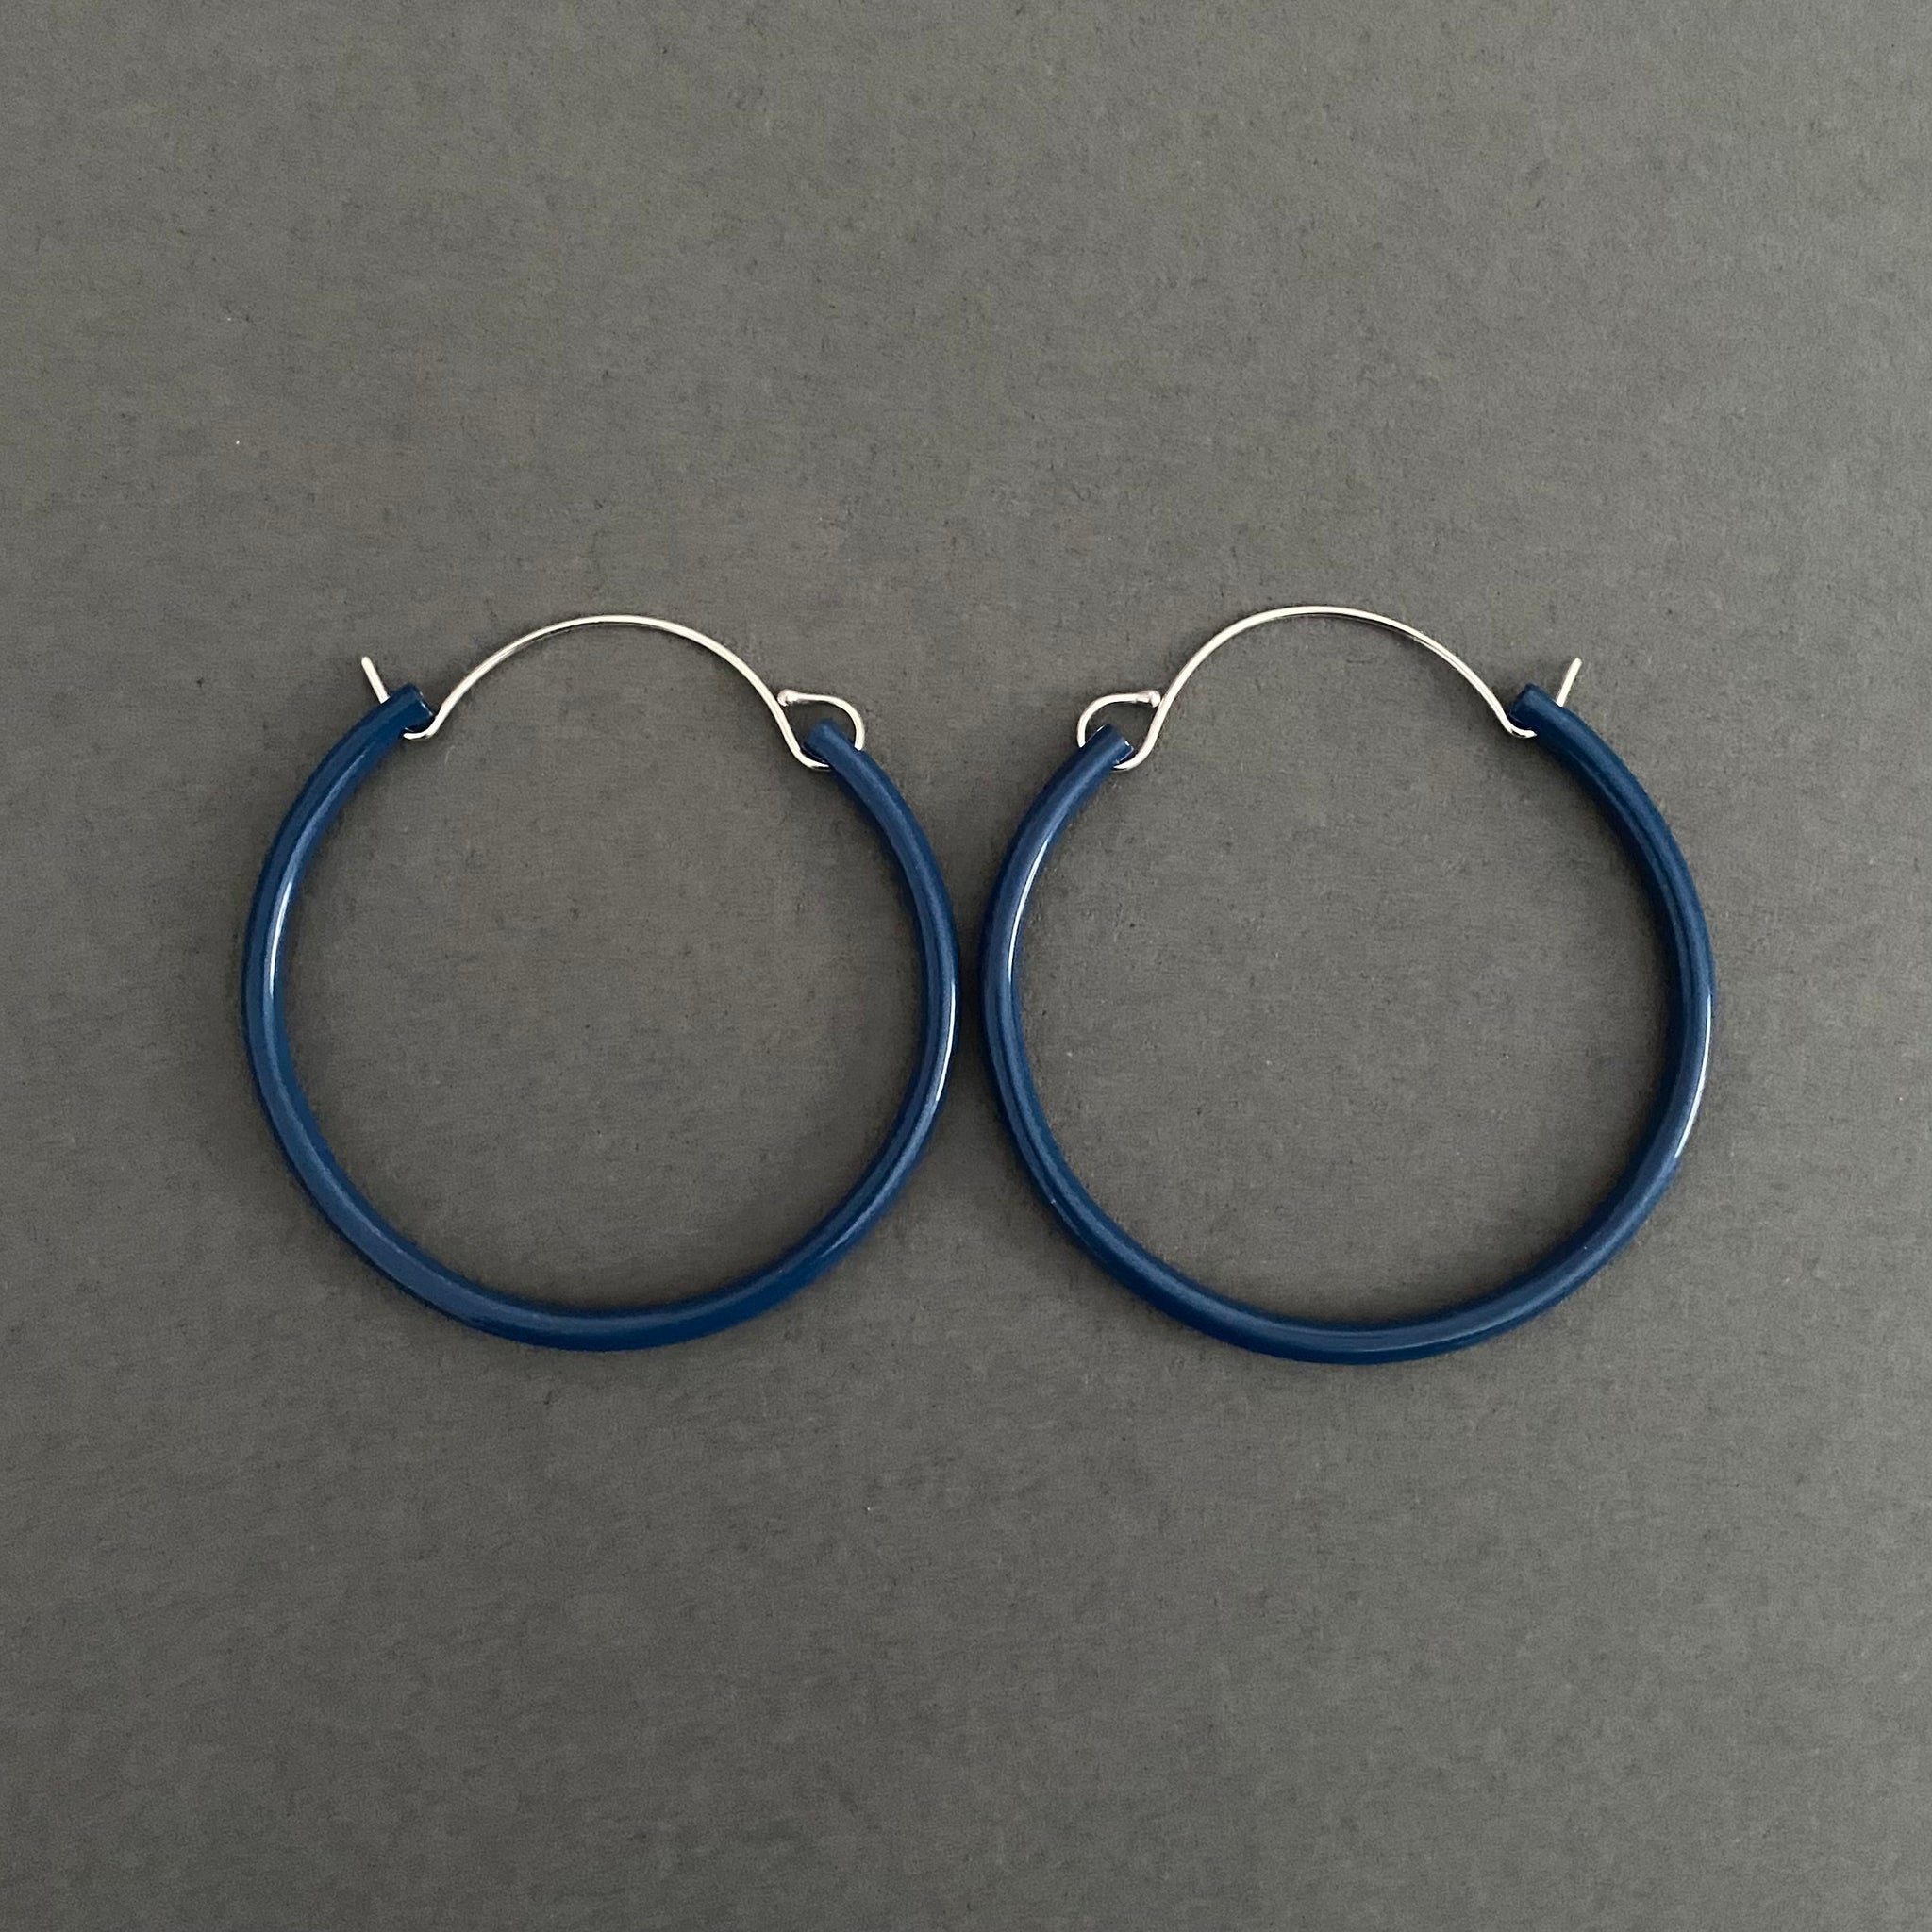 Tubing Hoop Bangle Earrings - Medium, Cadet Blue